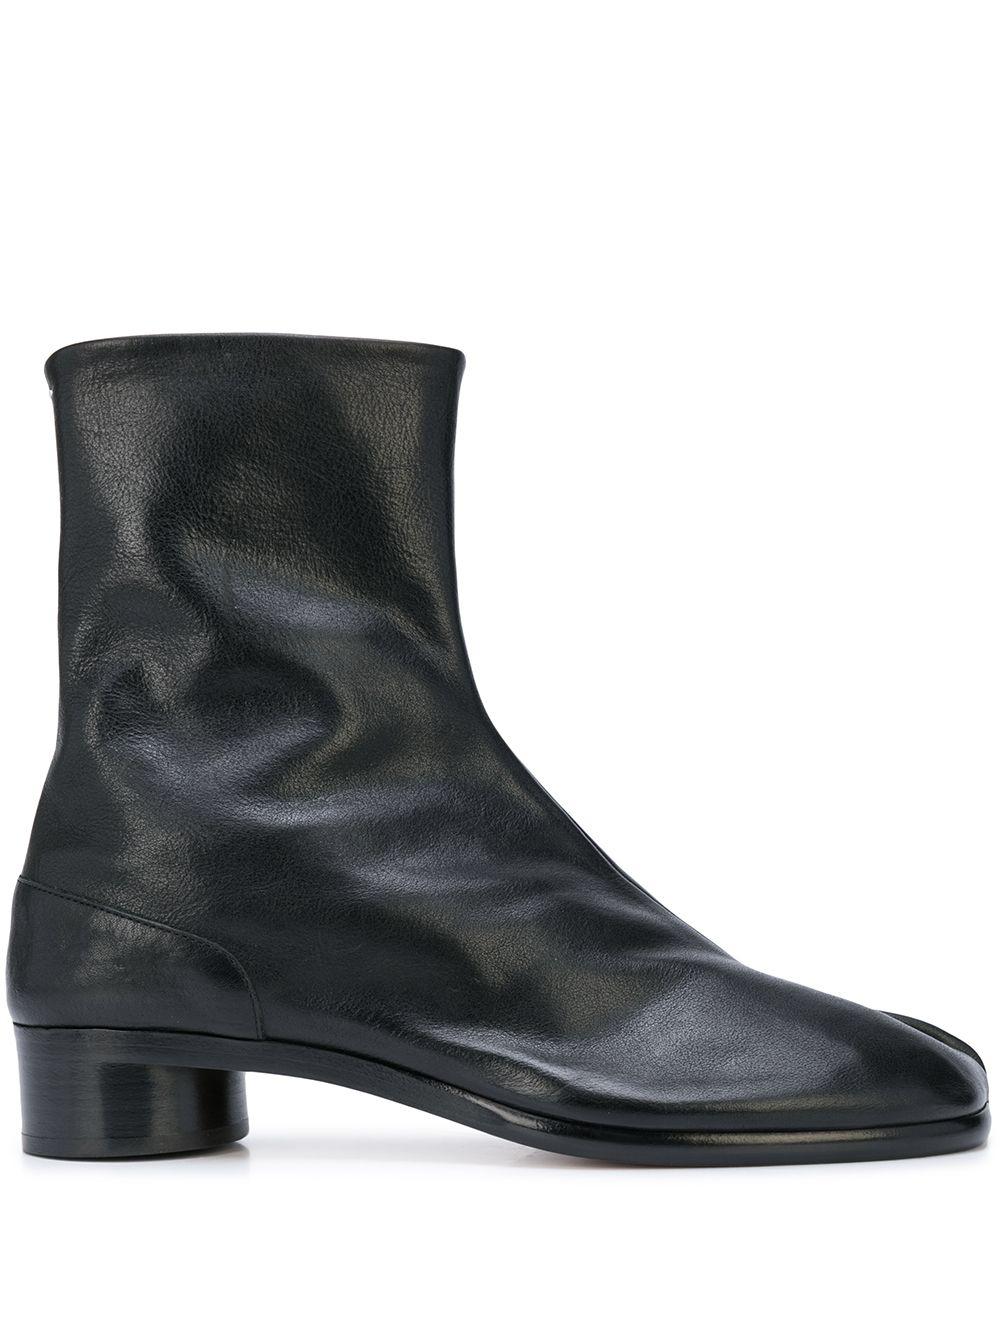 Maison Margiela Low Heel Leather Tabi Boots in Black for Men - Lyst